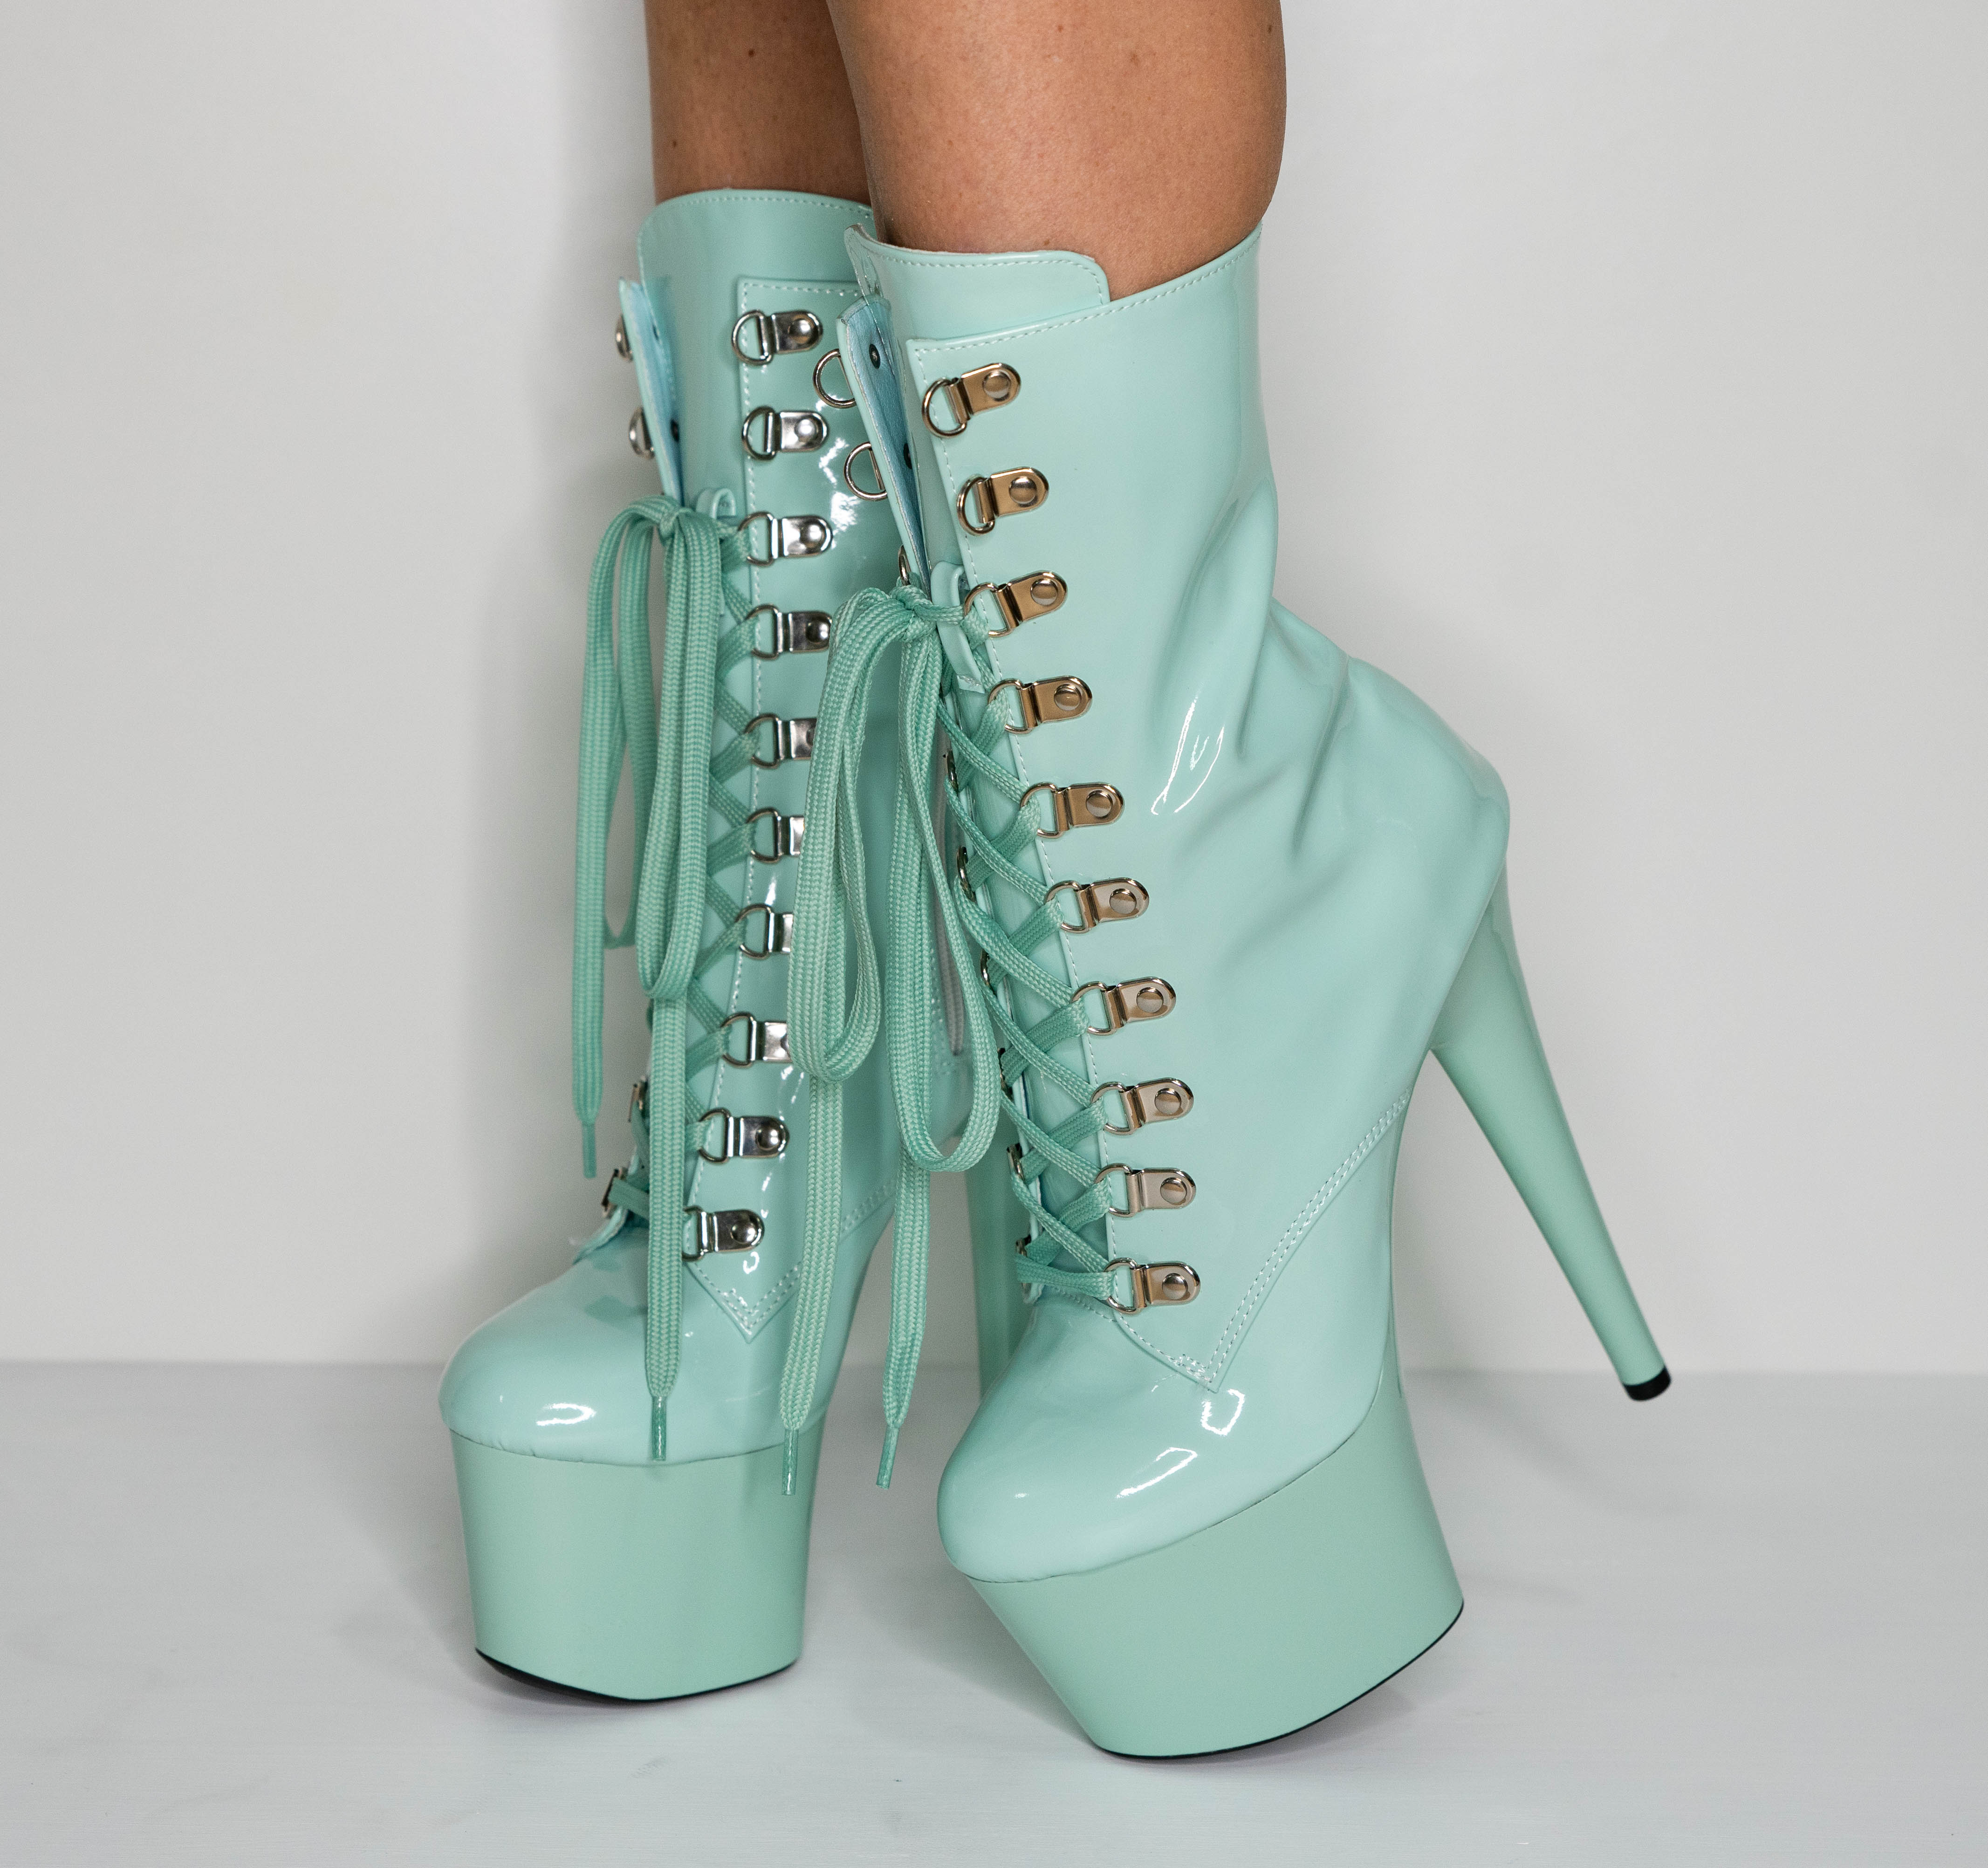 711-Flirt-C Ellie Shoes, 7 inch pointed Stiletto high heels Open Toe  Platforms Ankle Strap shoes